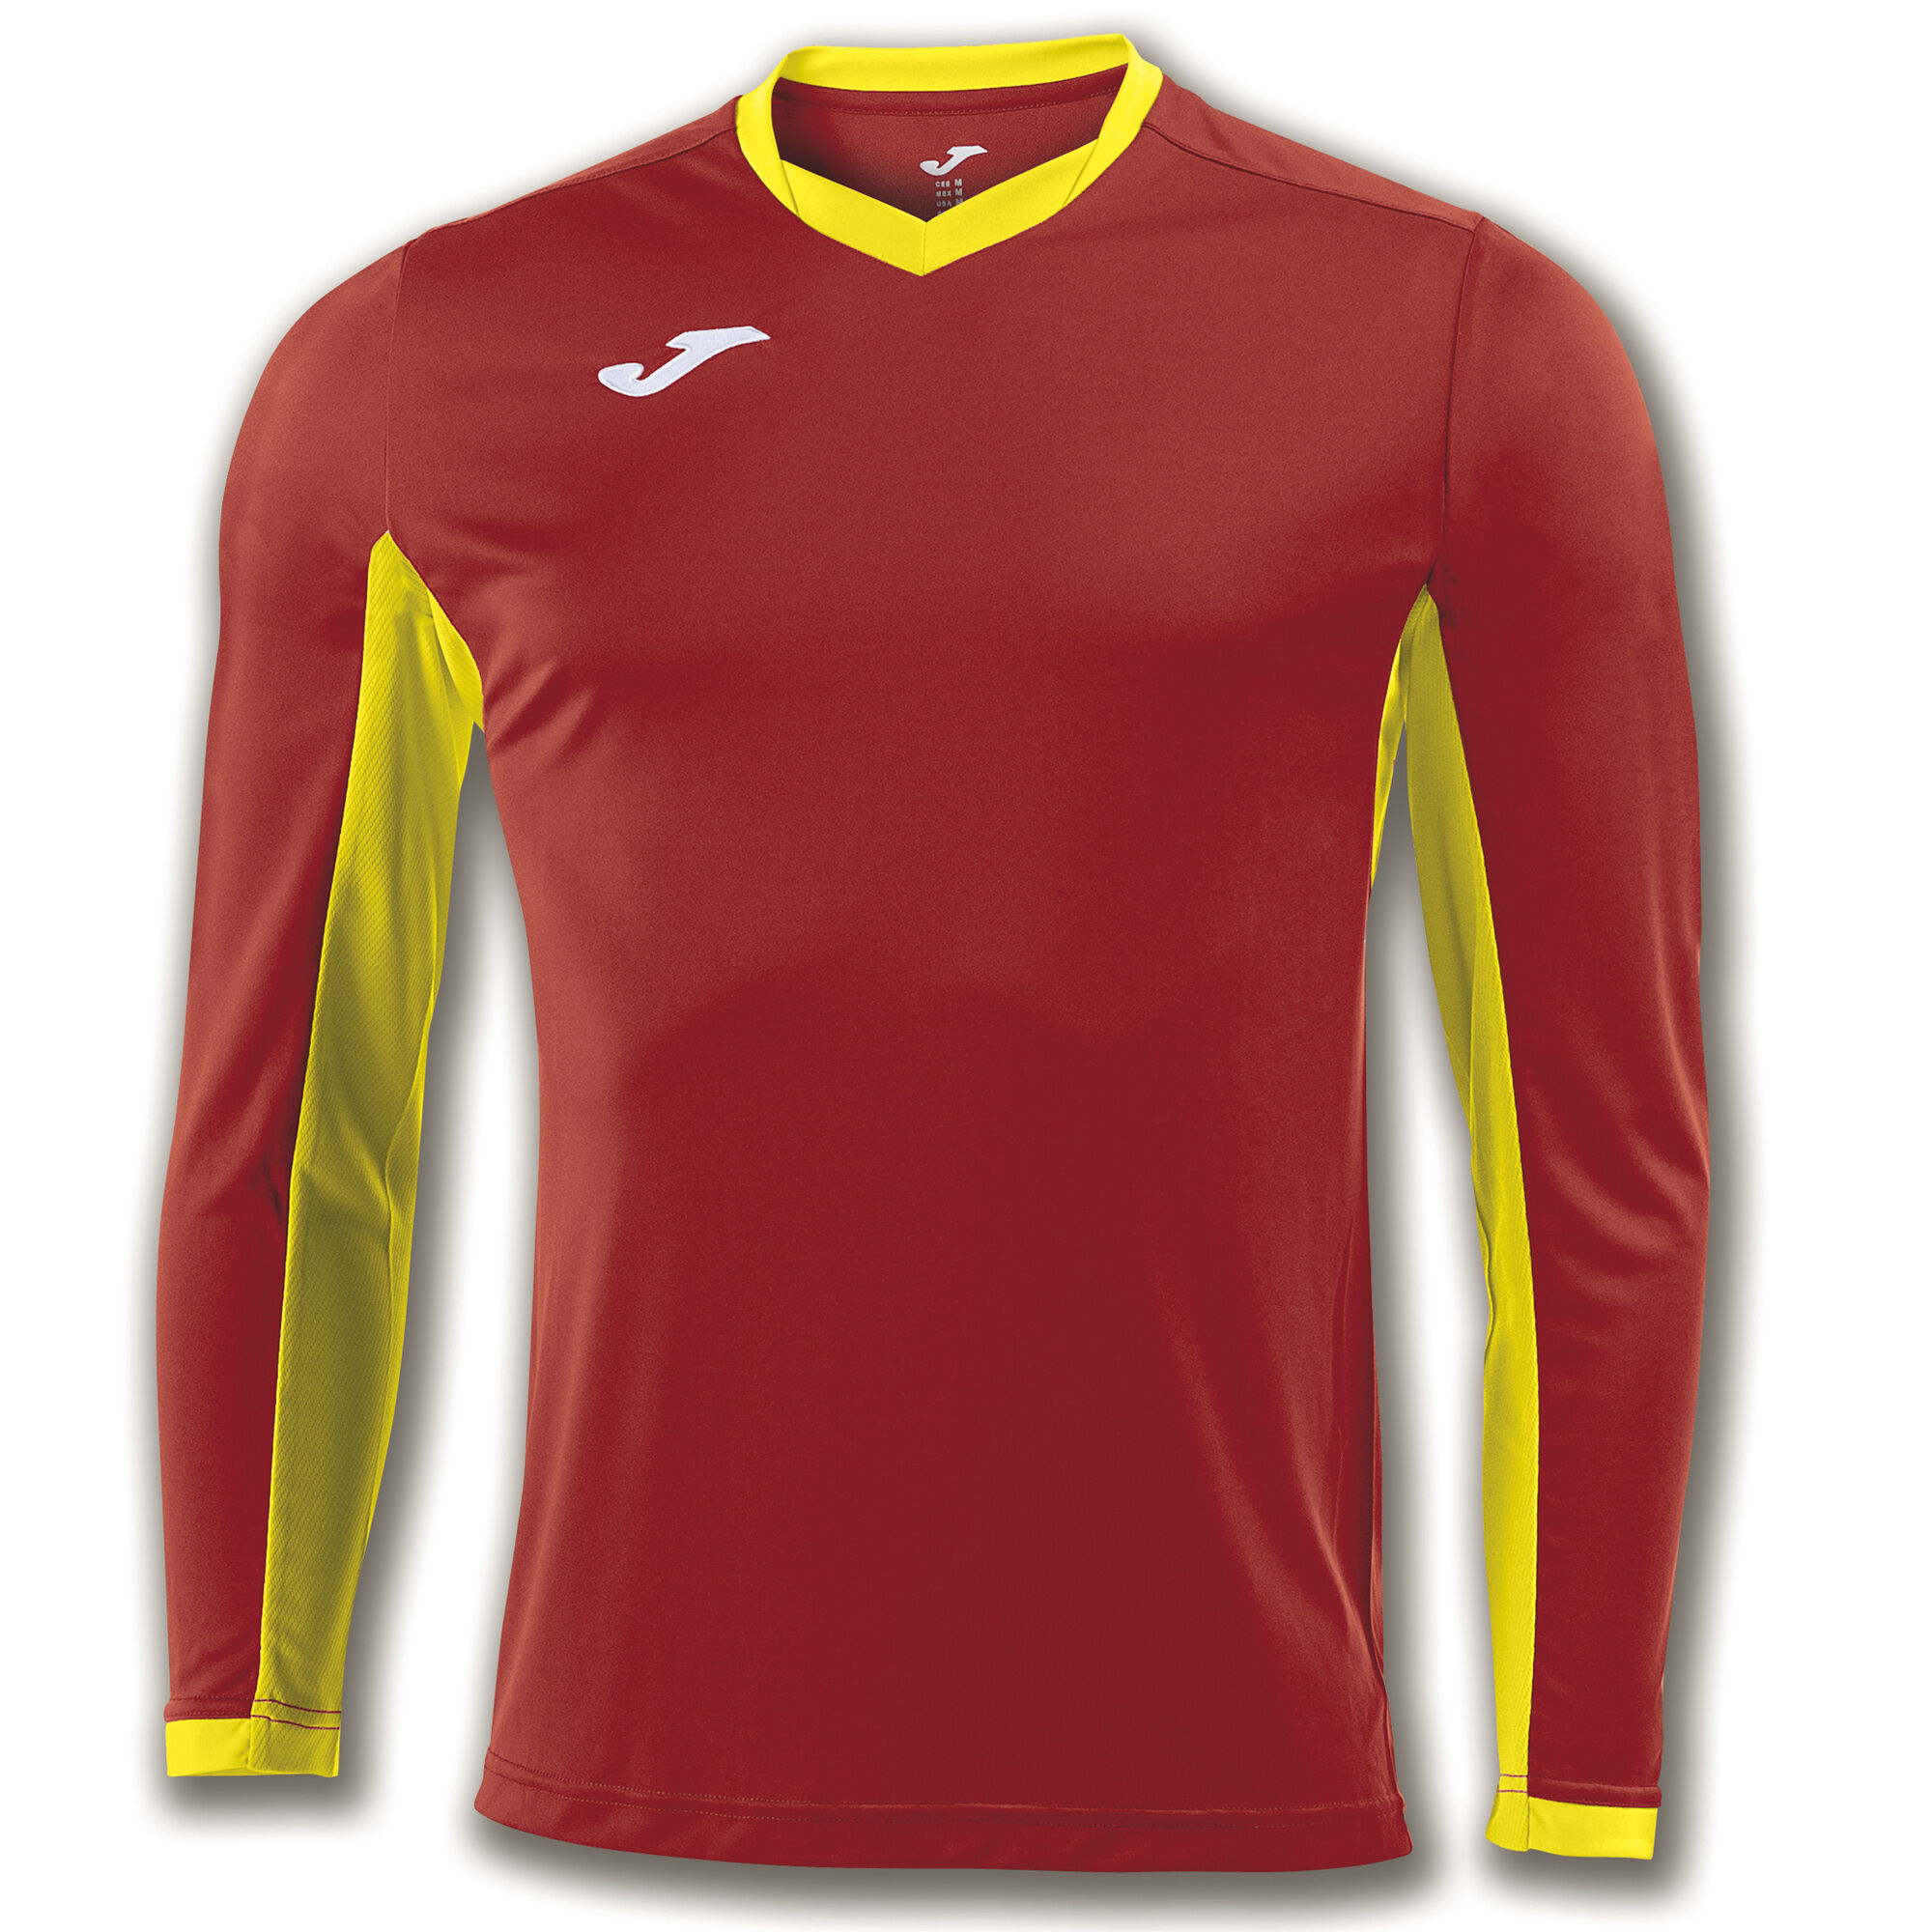 Camiseta manga larga hombre Championship IV rojo amarillo